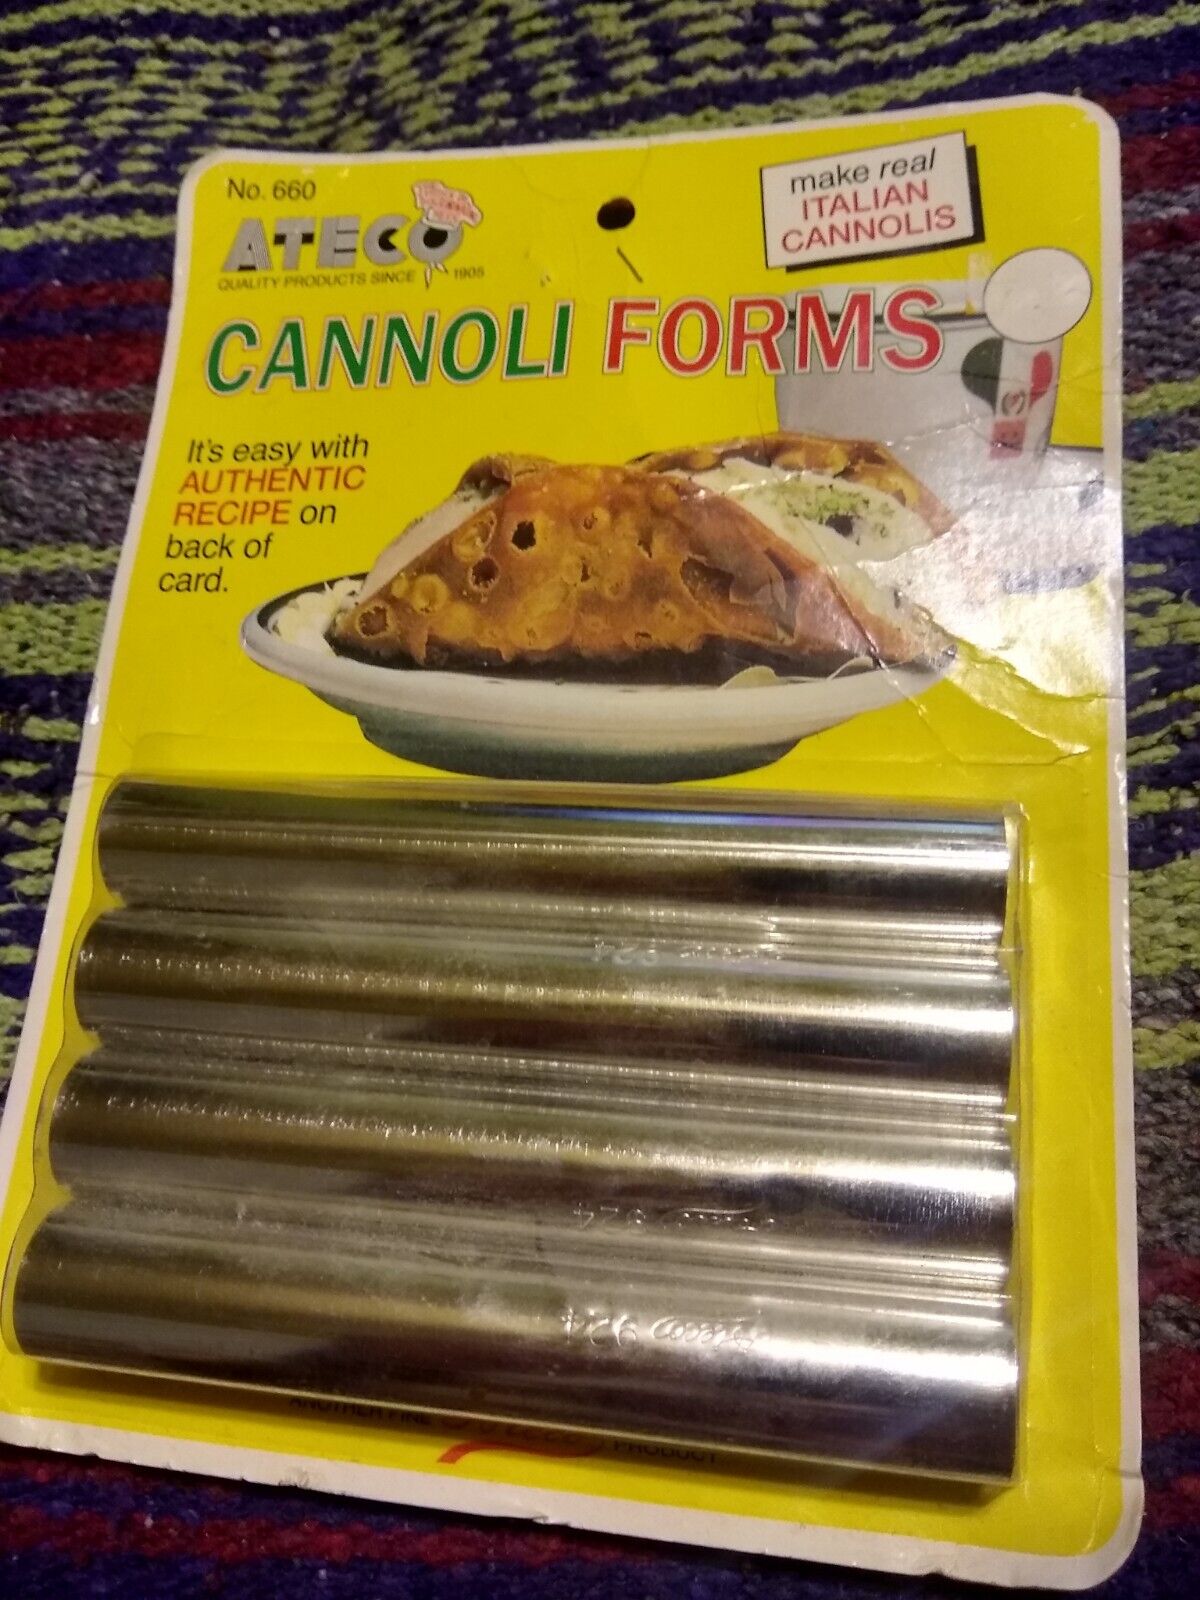 Vintage Ateco Real Italian Cannolis Metal Tubes Cannoli Forms With Recipe